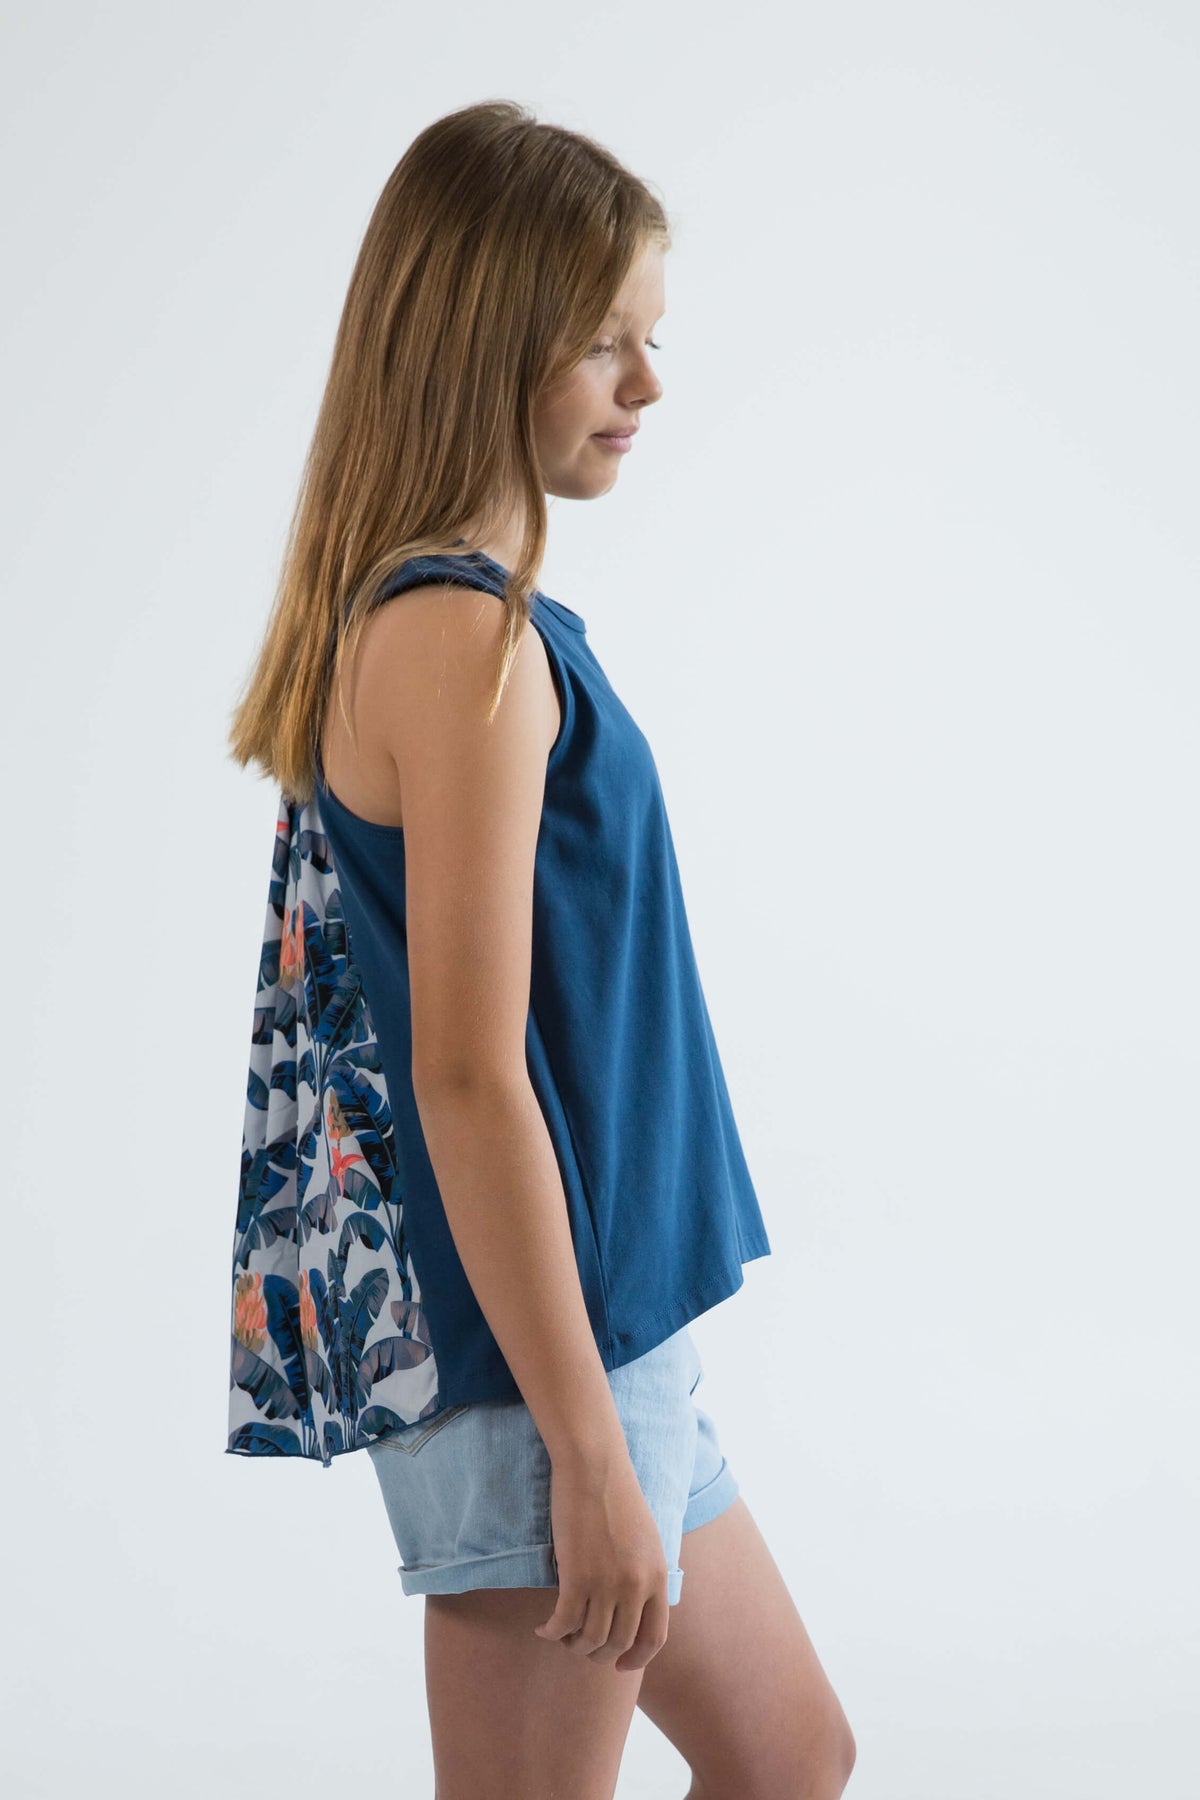 blue teen girls clothing sleeveless singlet top palm tree print by Love Haidee Australia side